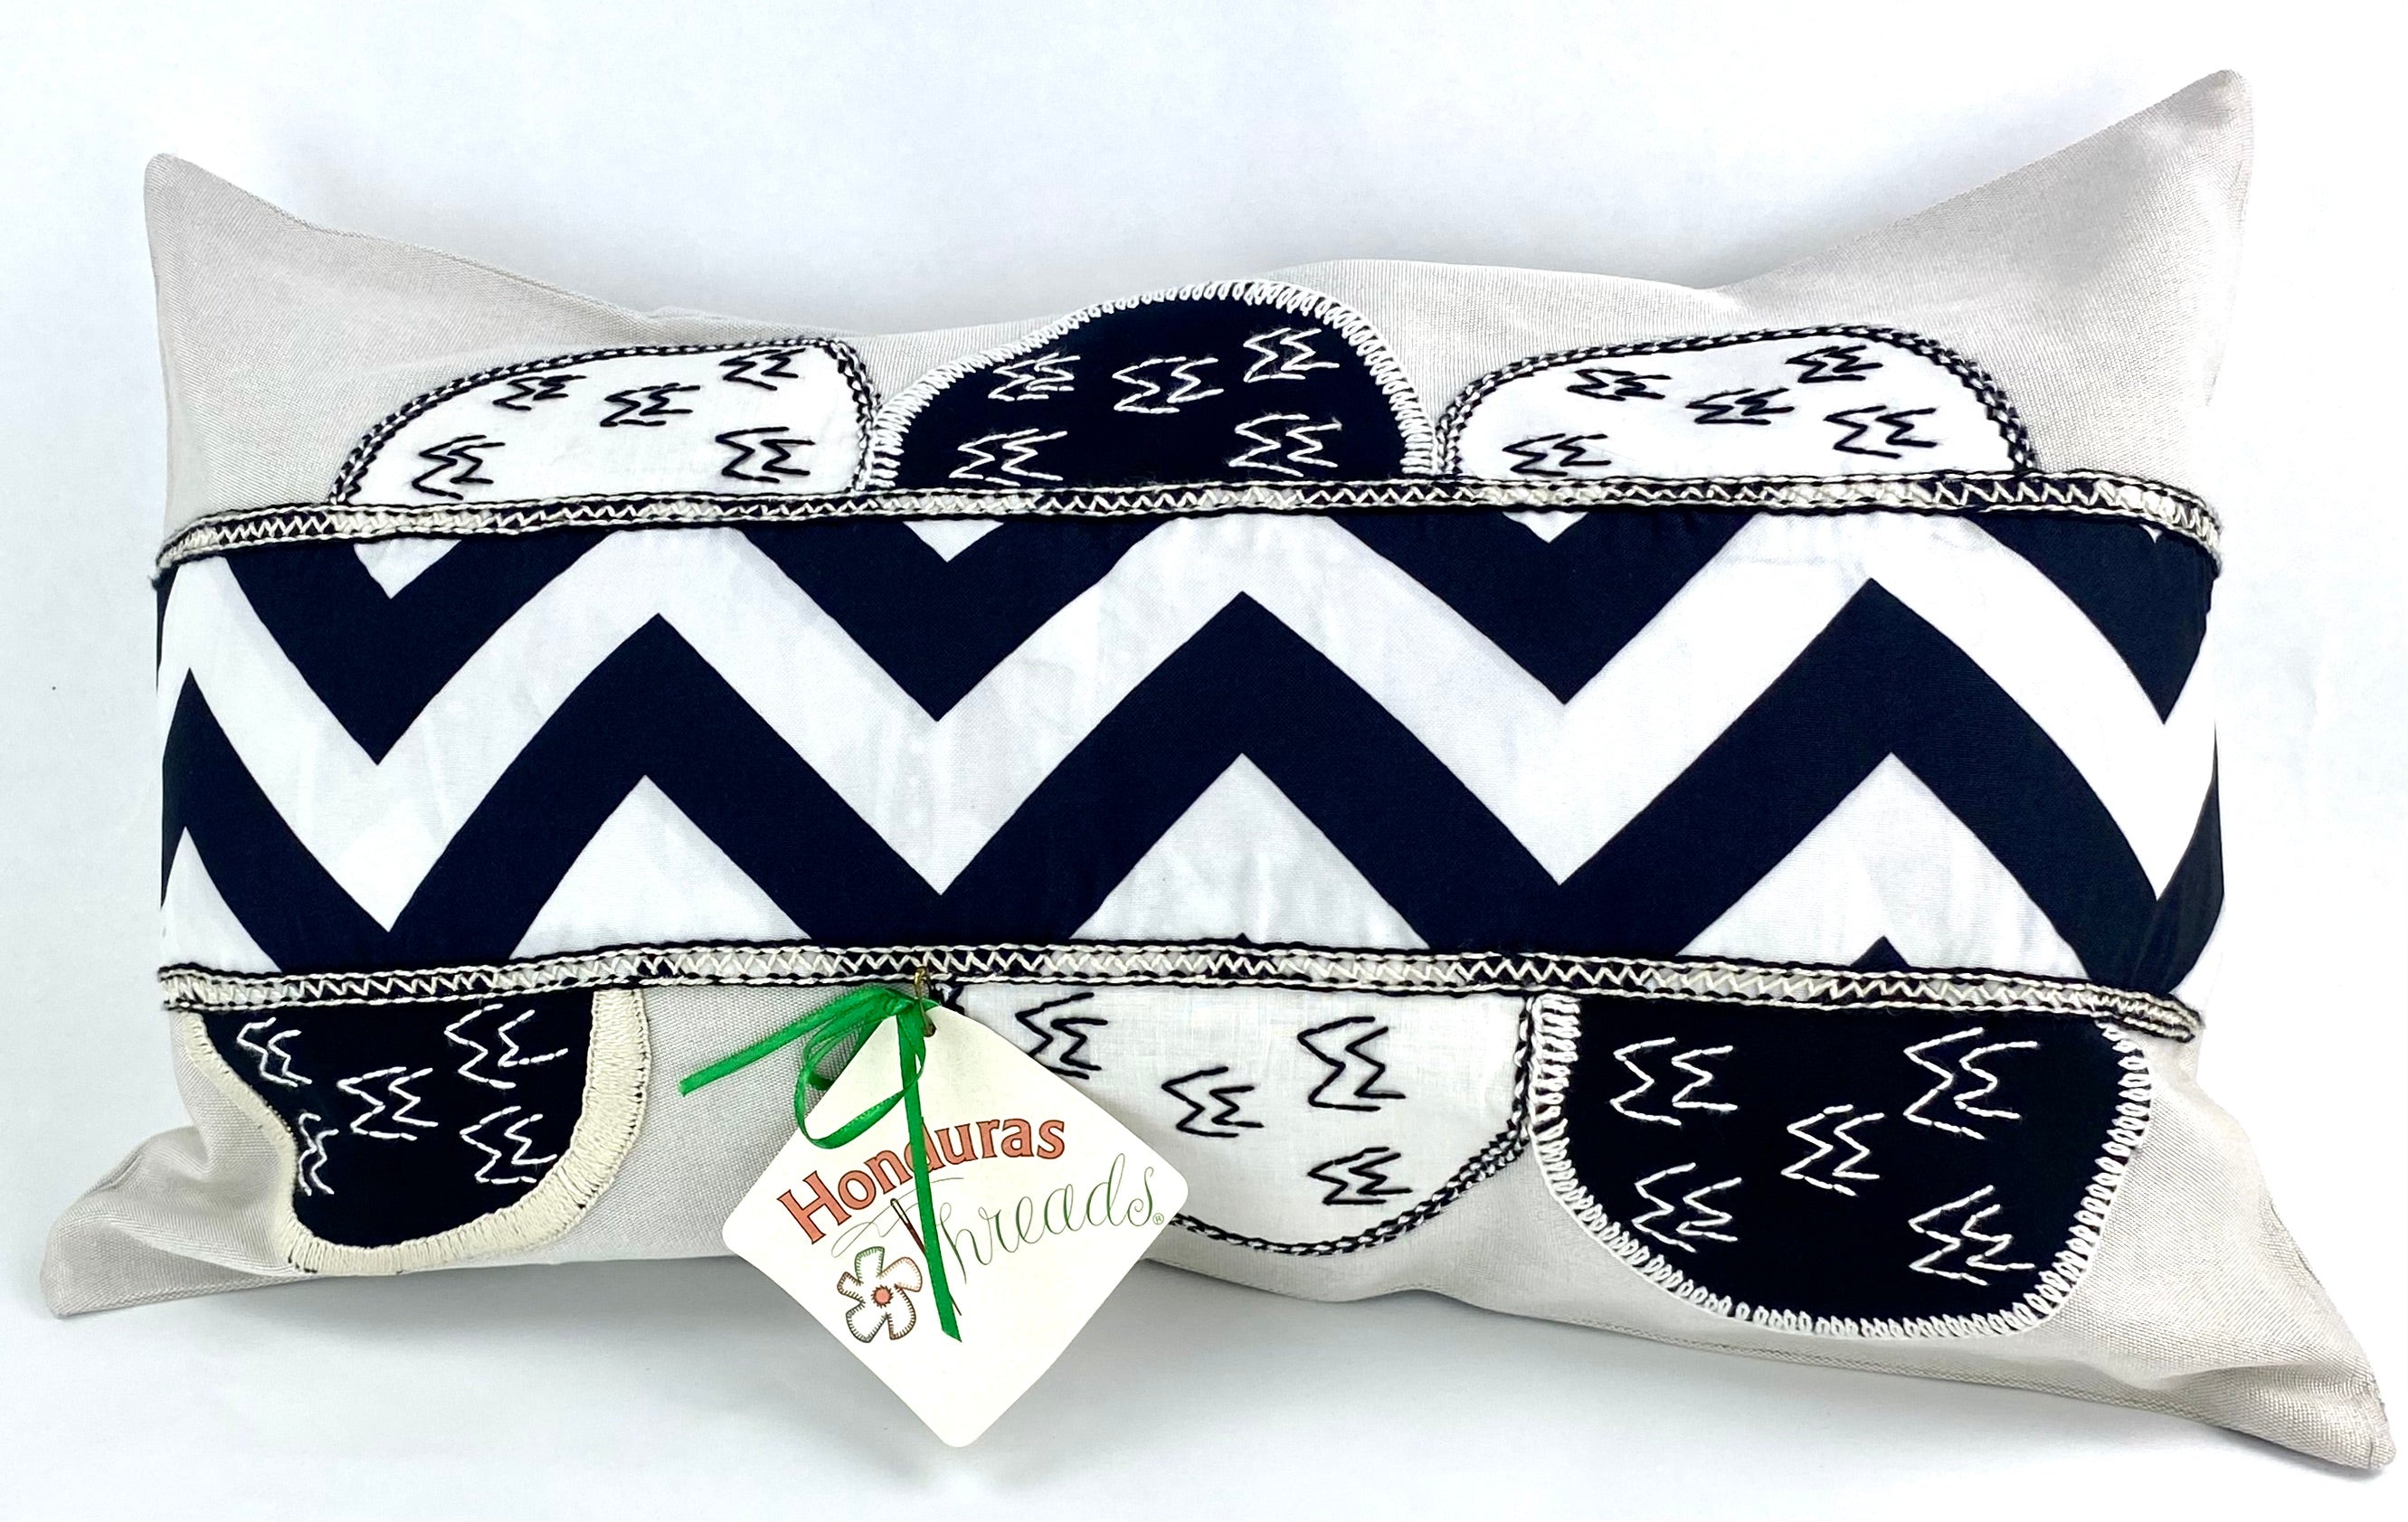 Piedras Lunar Design Embroidered Pillow on white (Copy) Honduras Threads